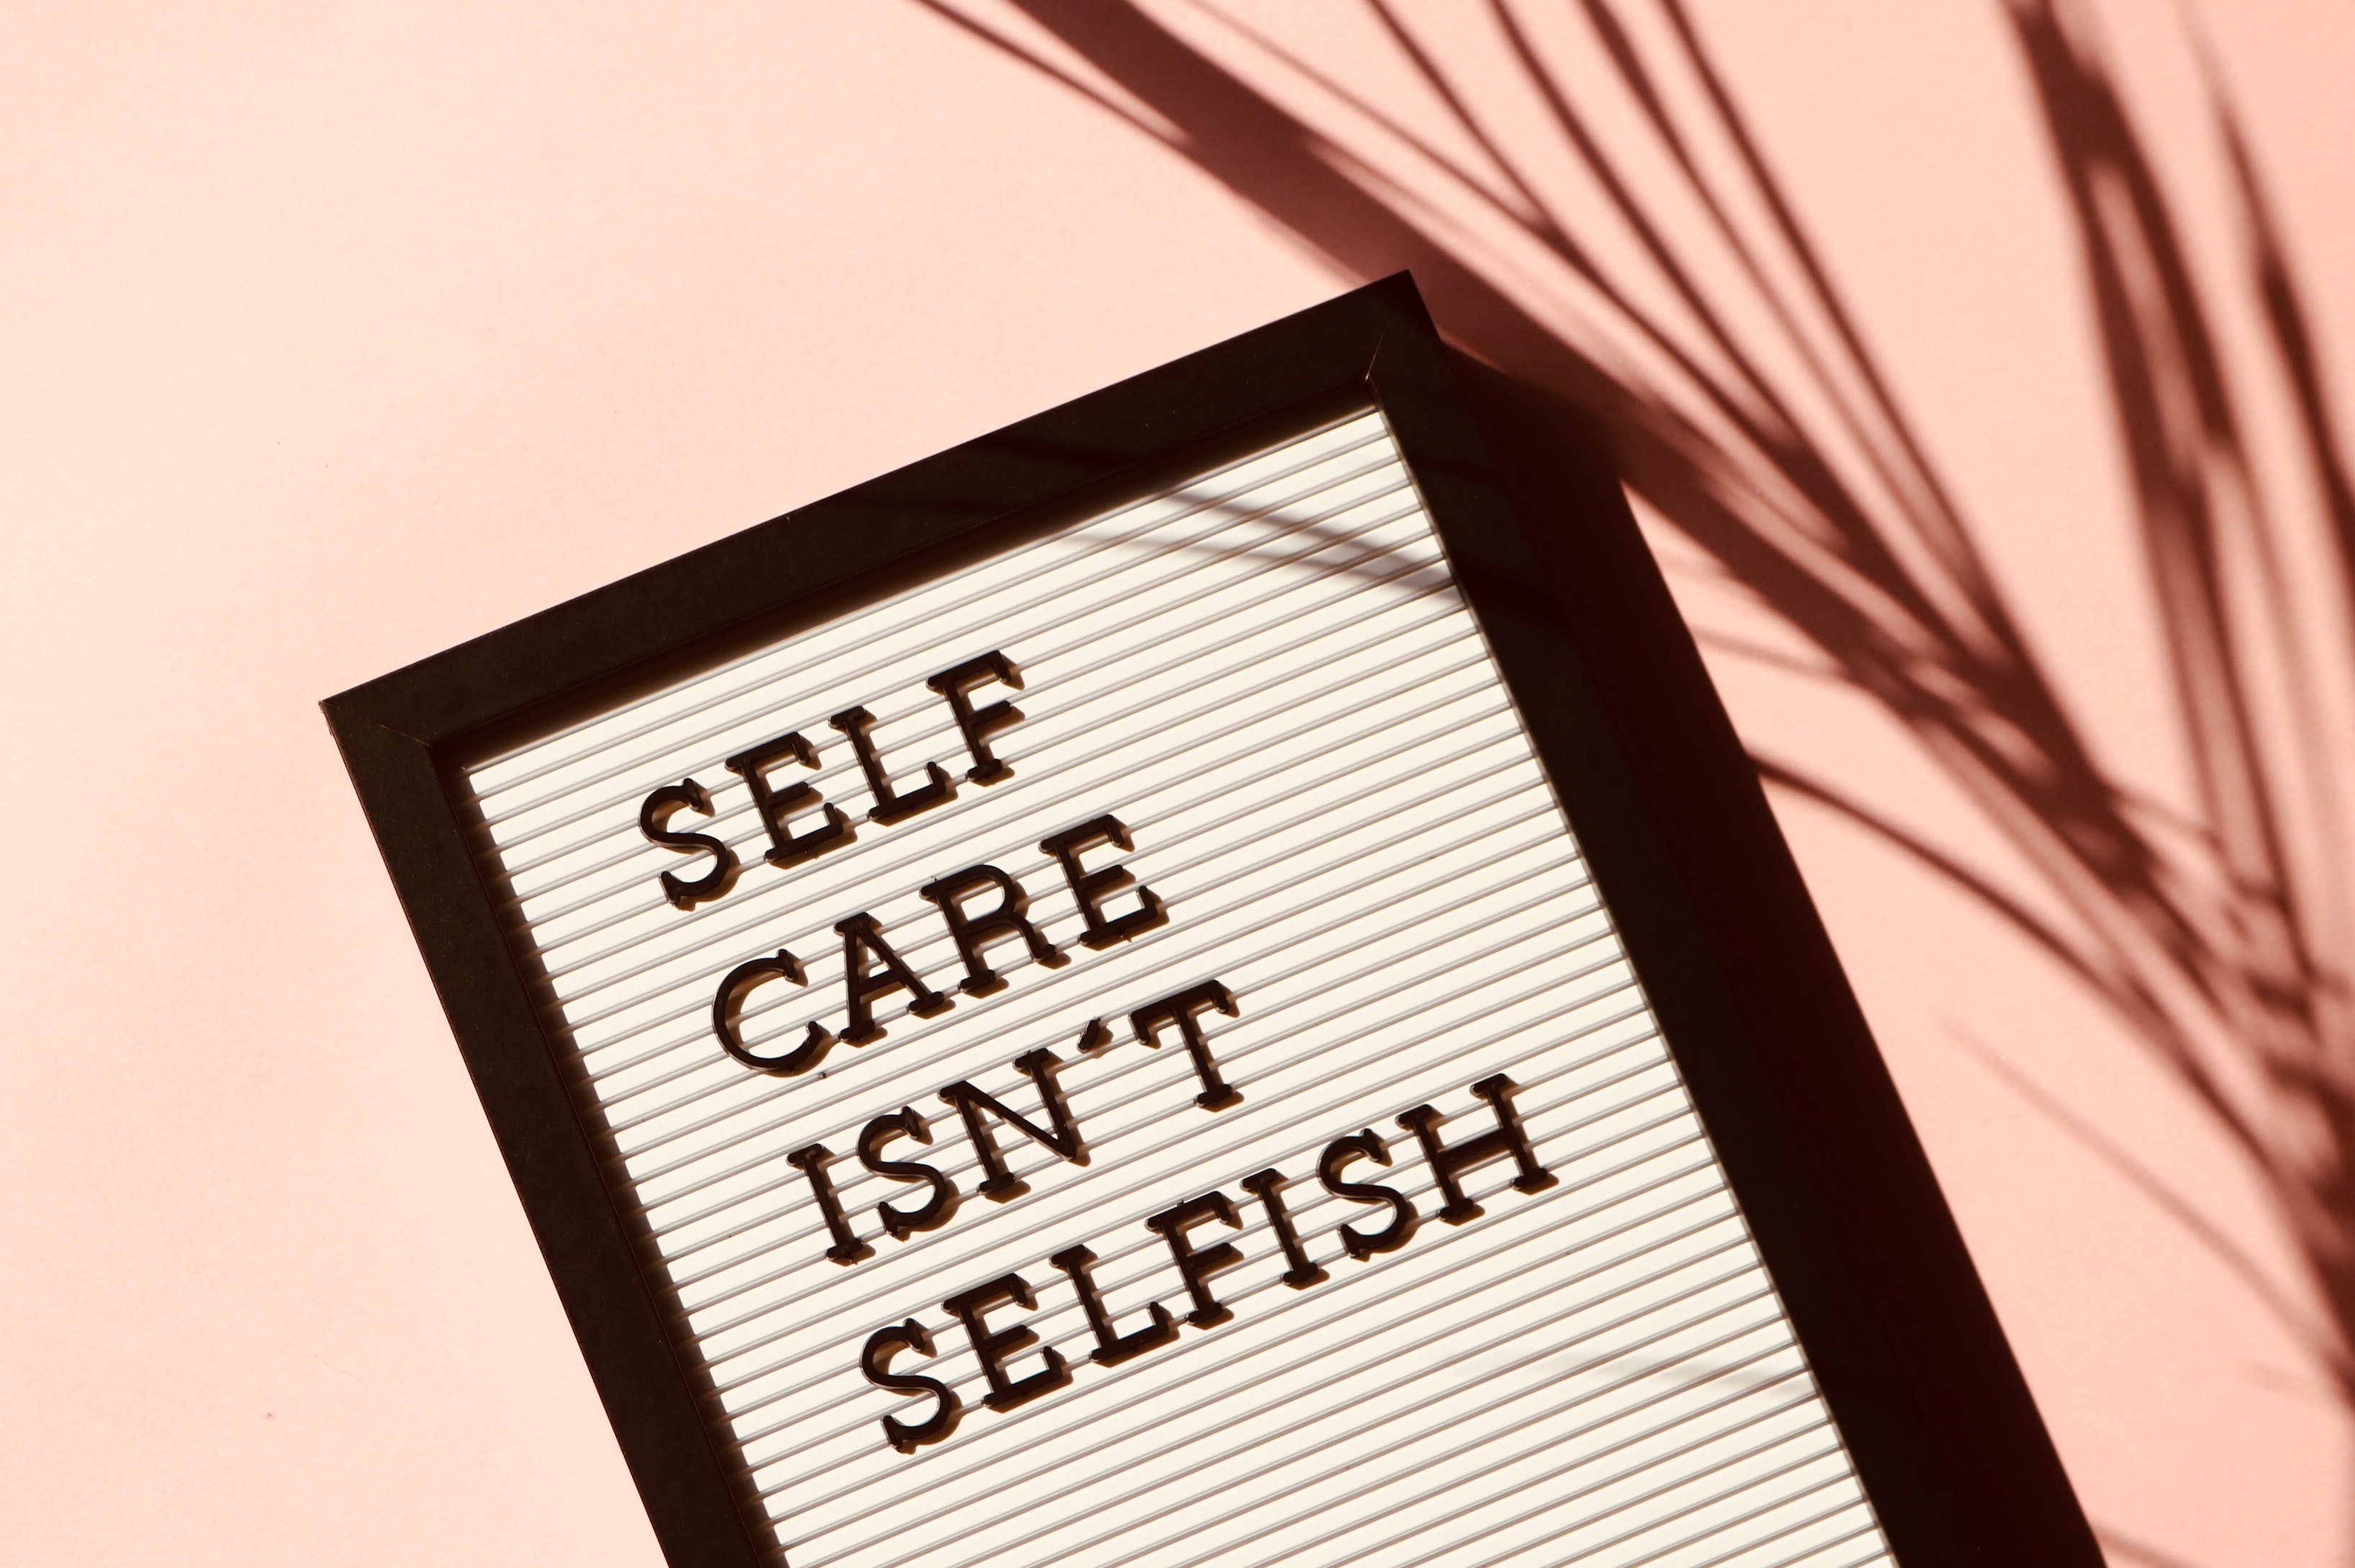 Bordje met tekst self care isn't selfish